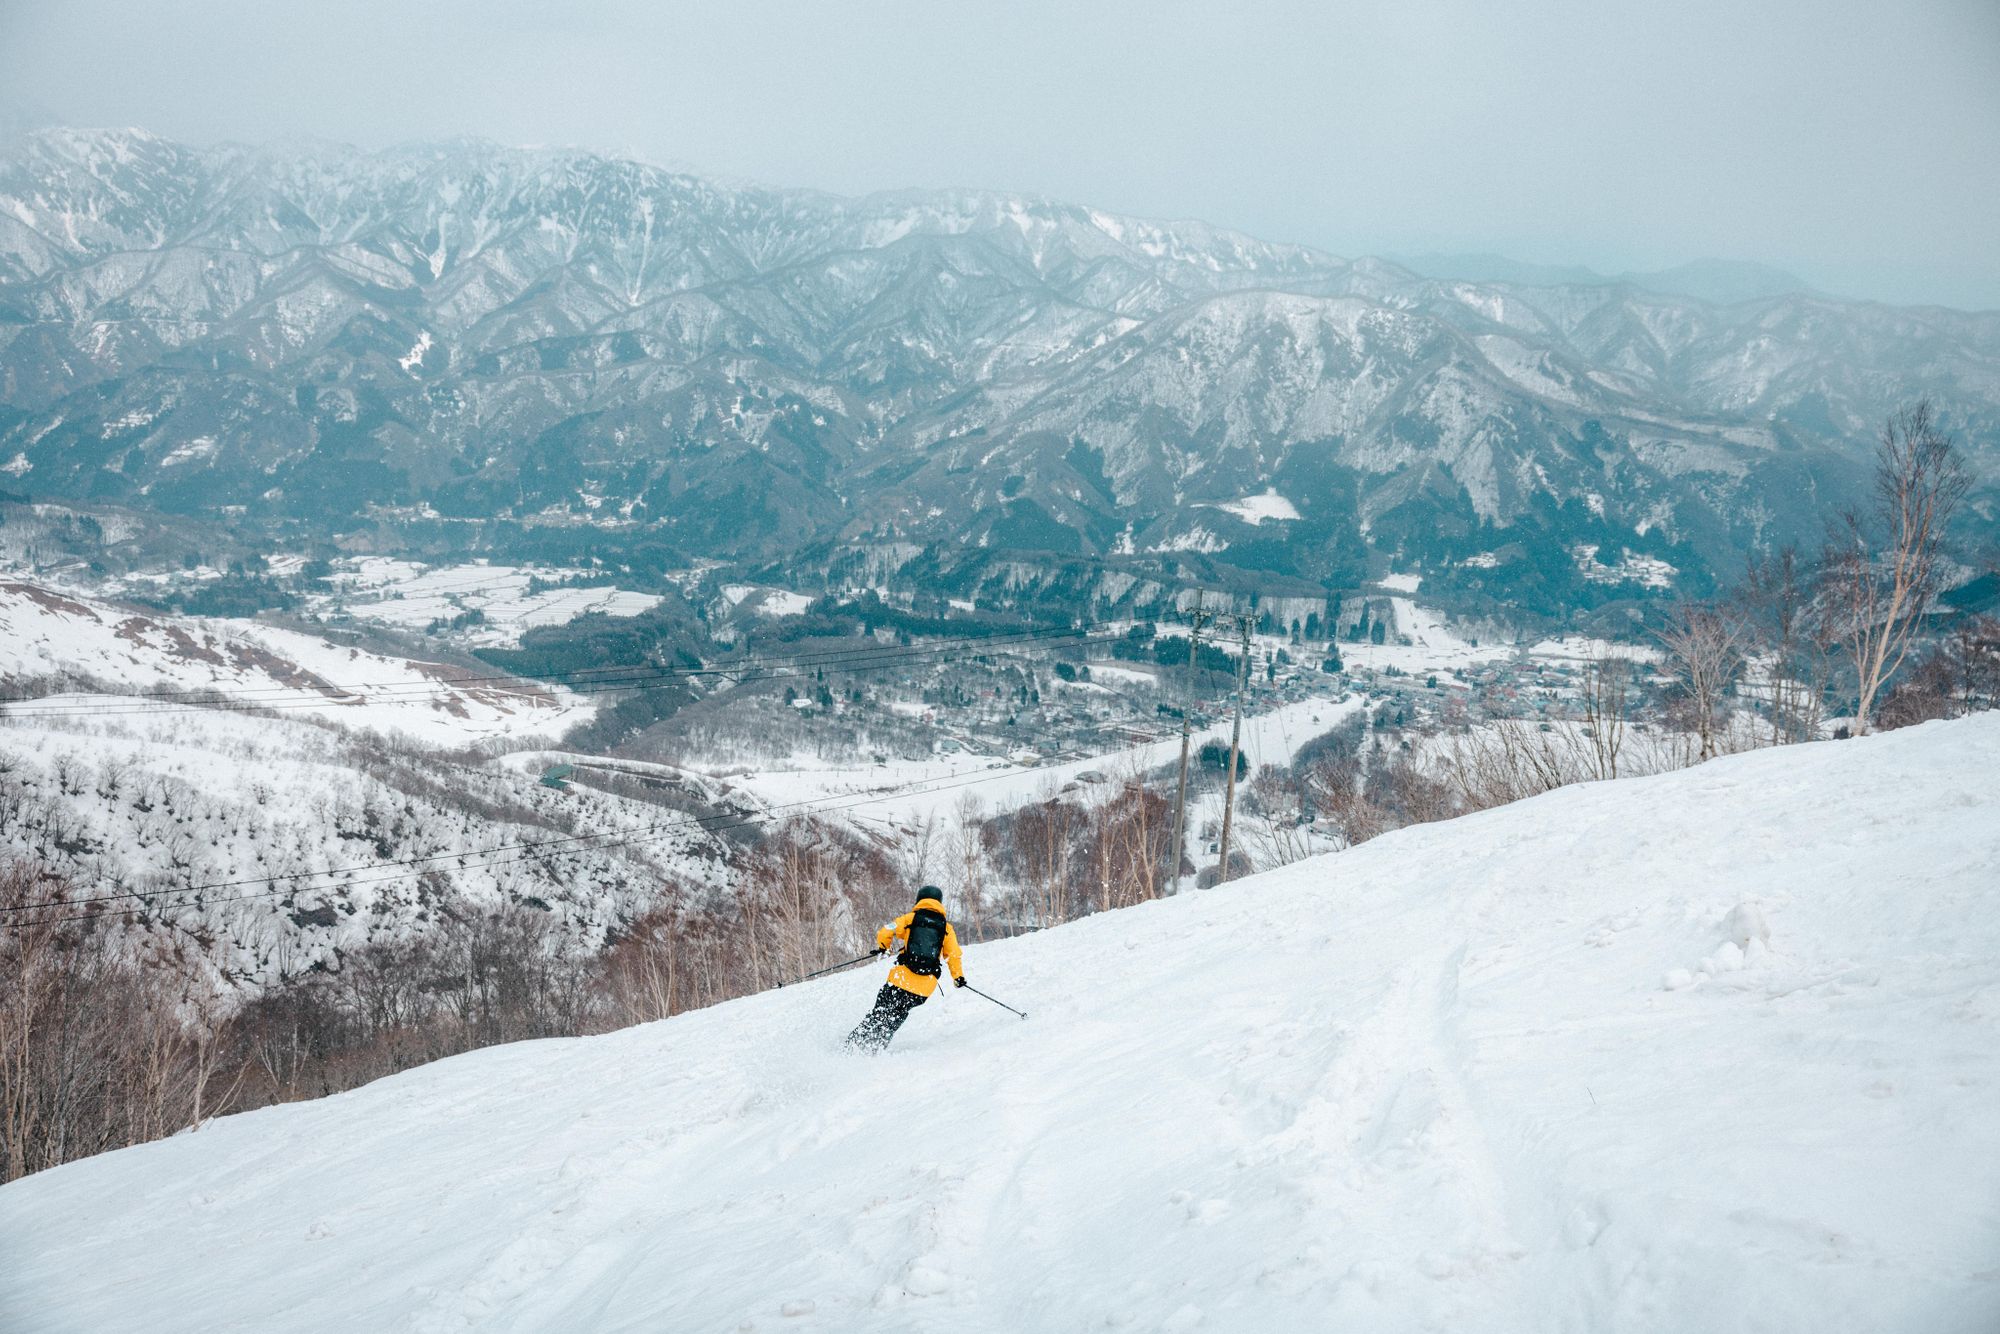 Tsugaike Mountain Resort, part of Hakuba Valley, becomes the home base for Slopes in Japan